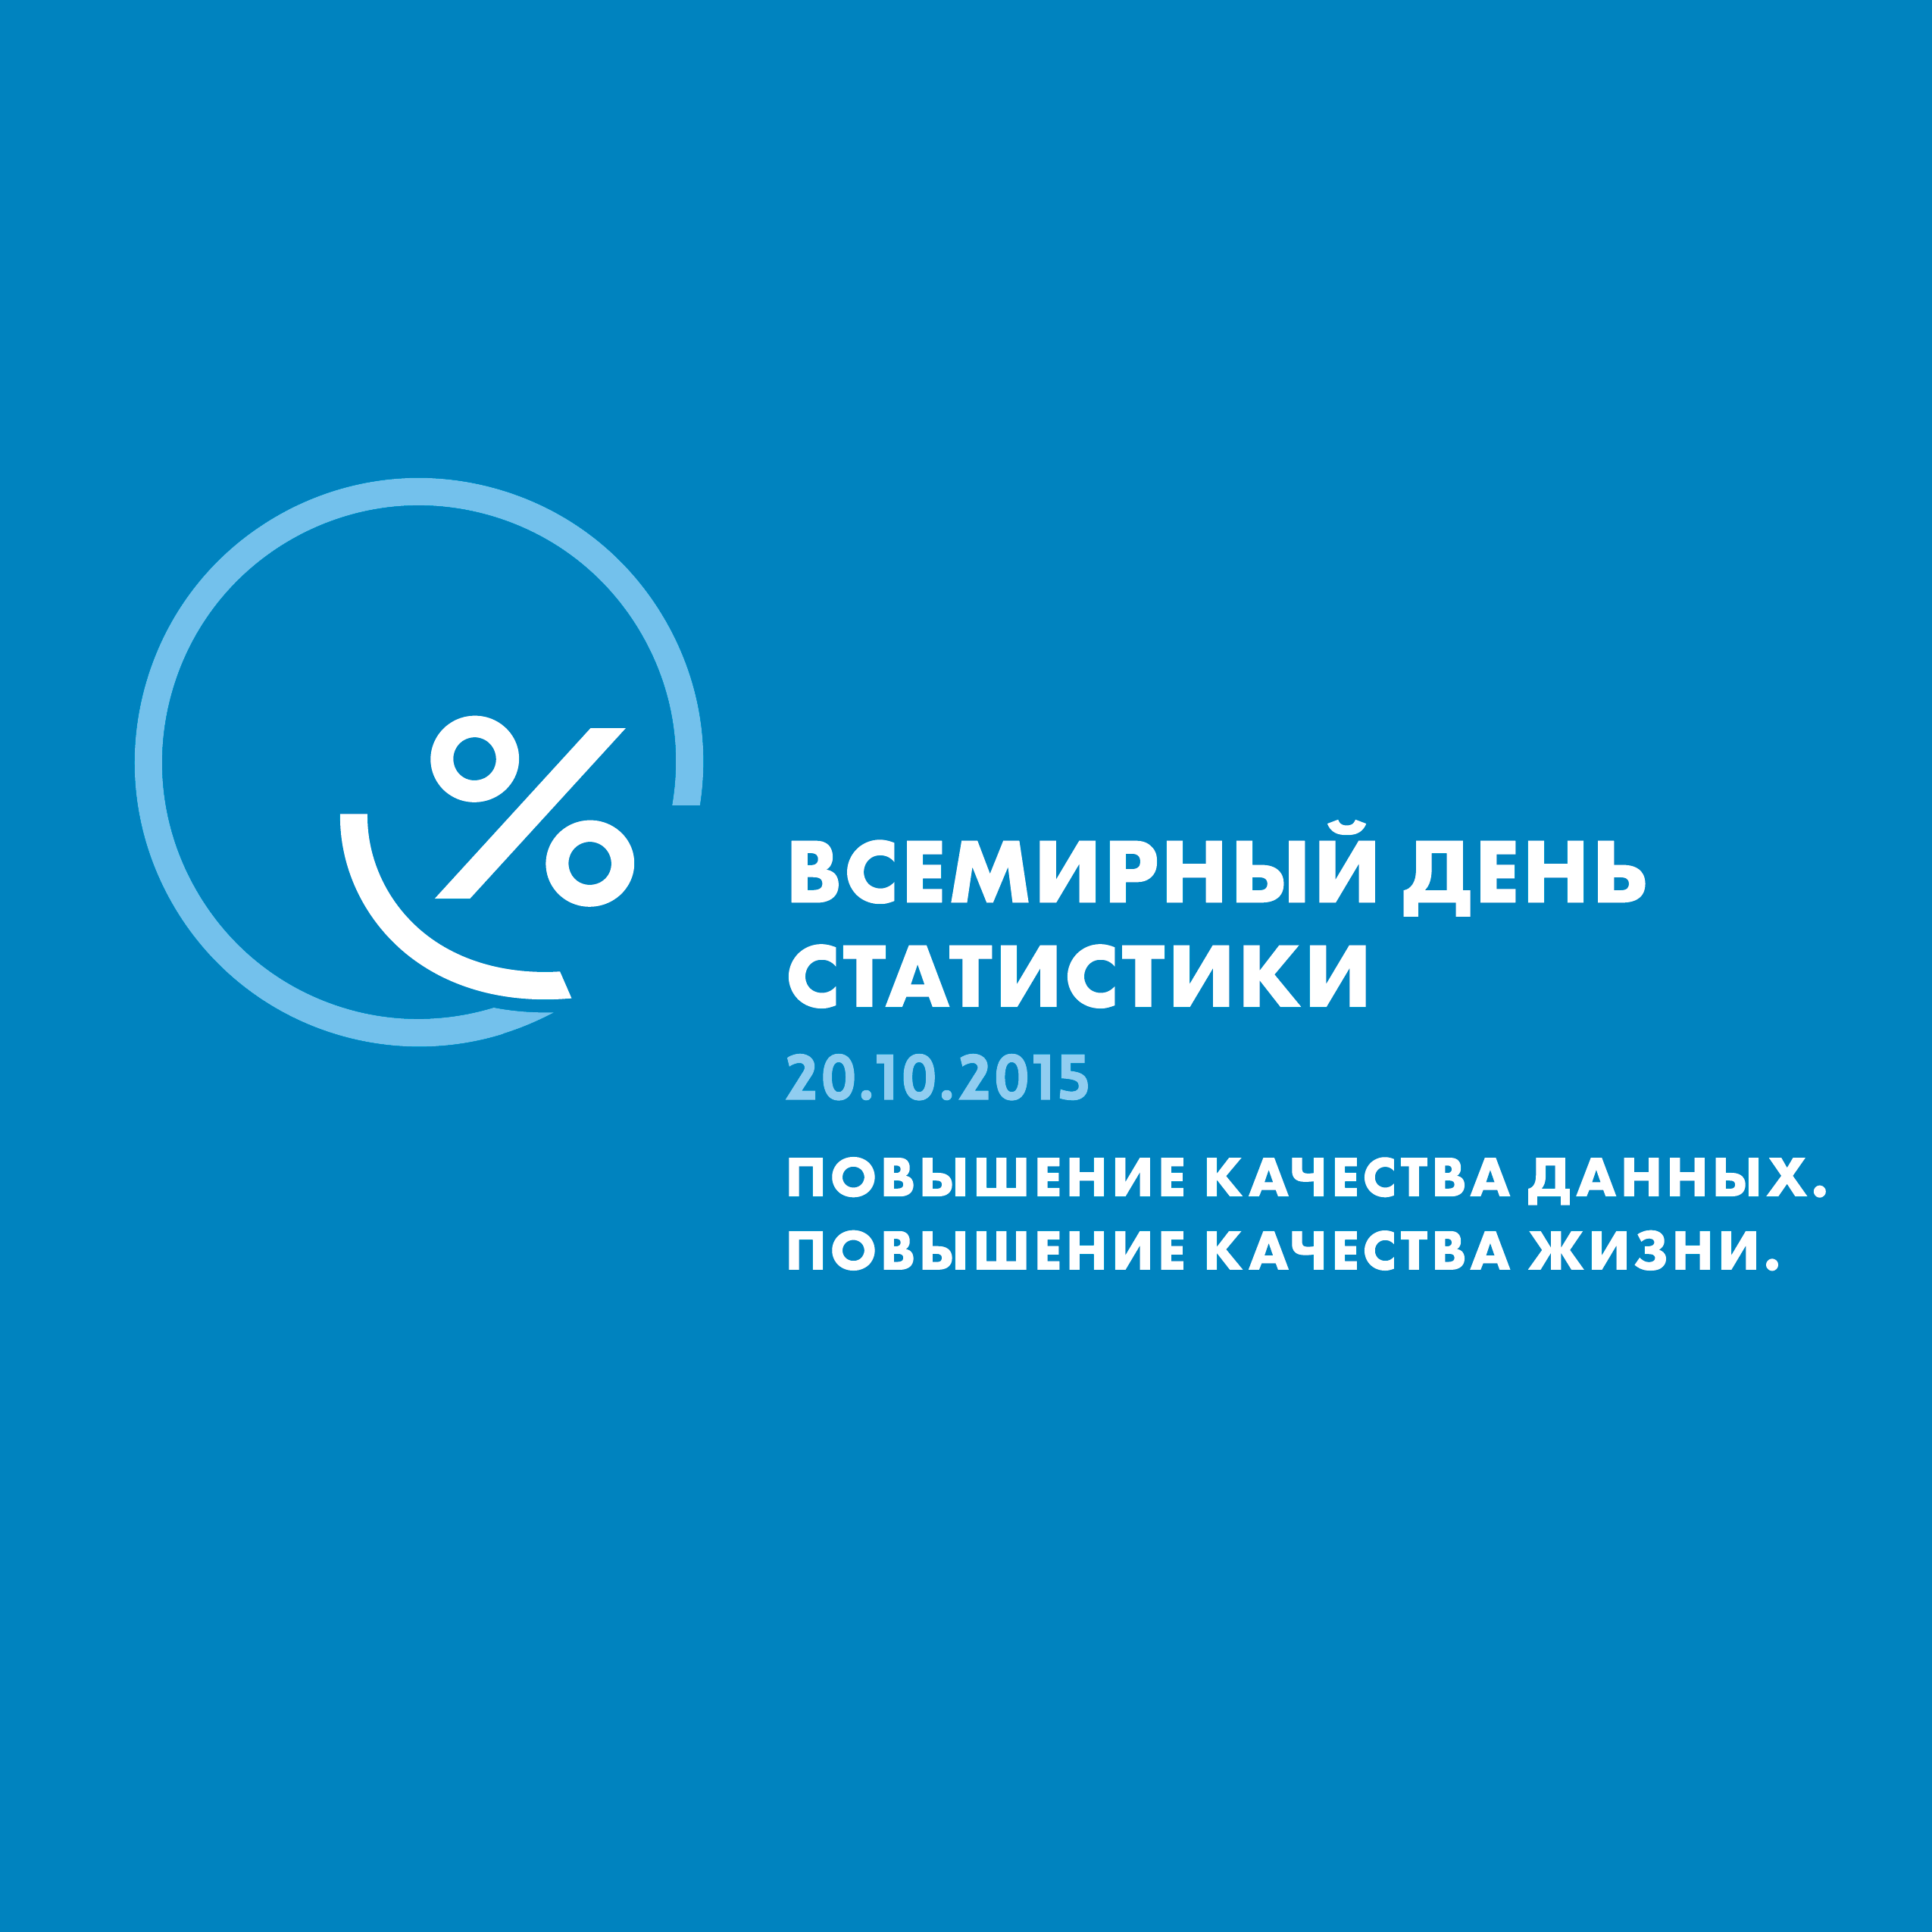 World Statistics Day Logo in Russian